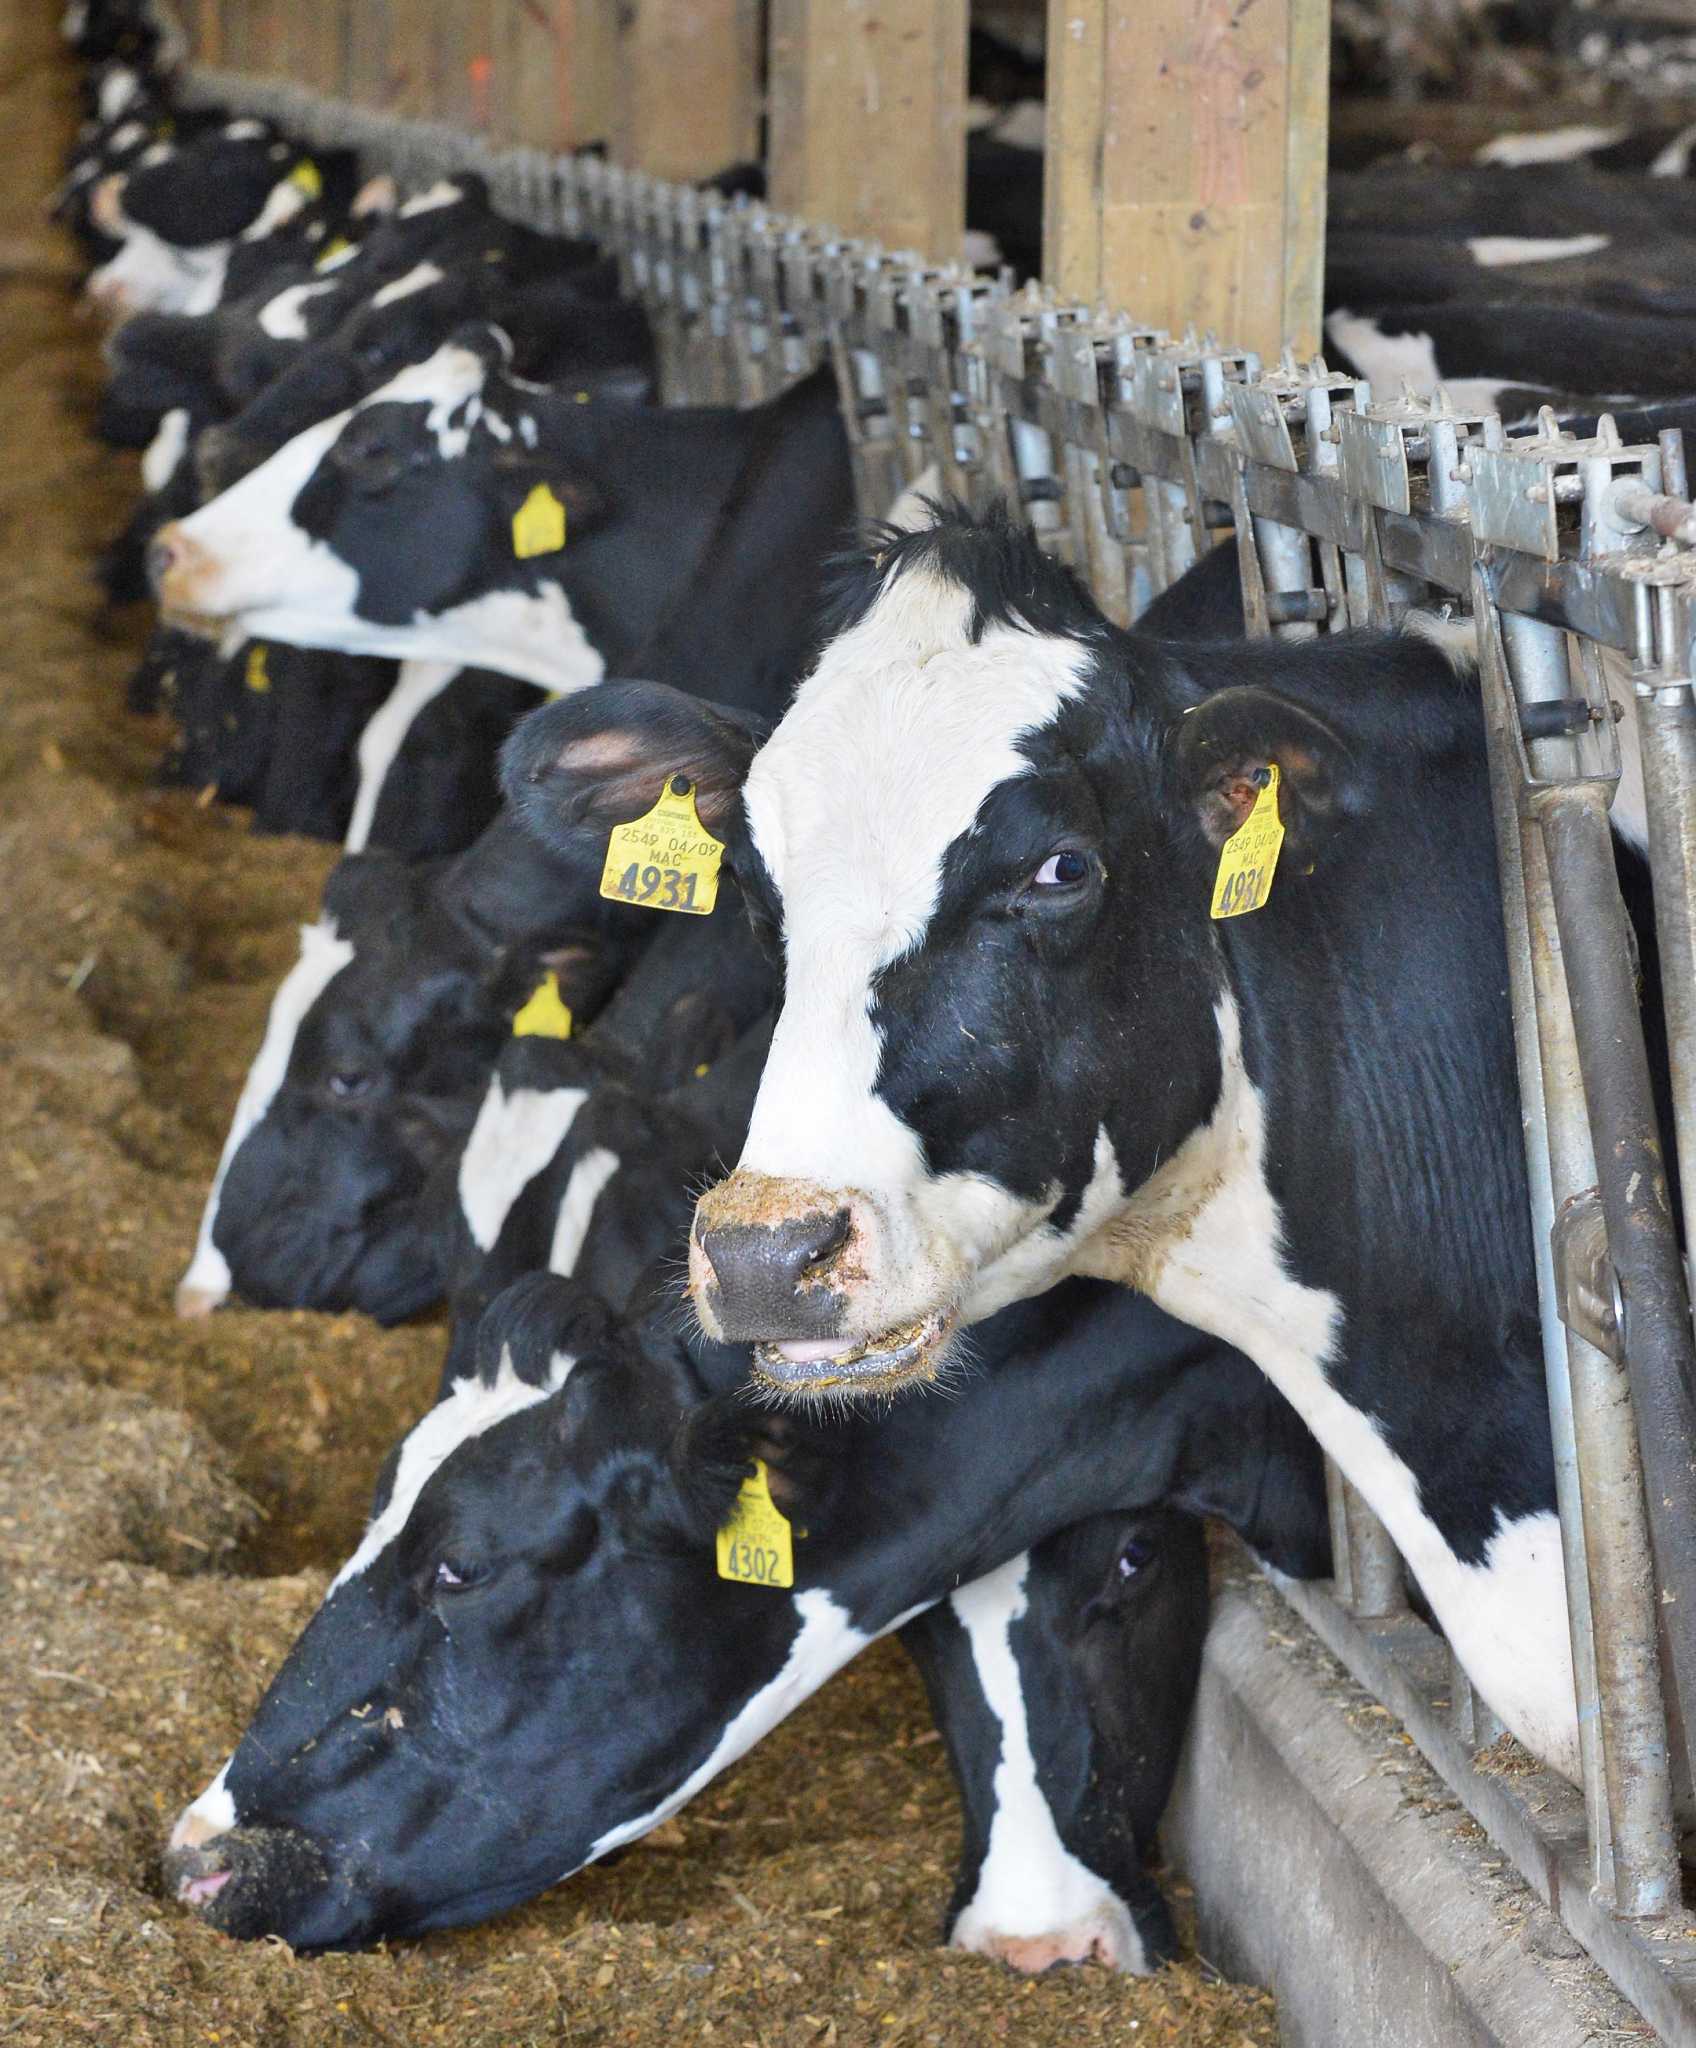 raising dairy bull calves for profit